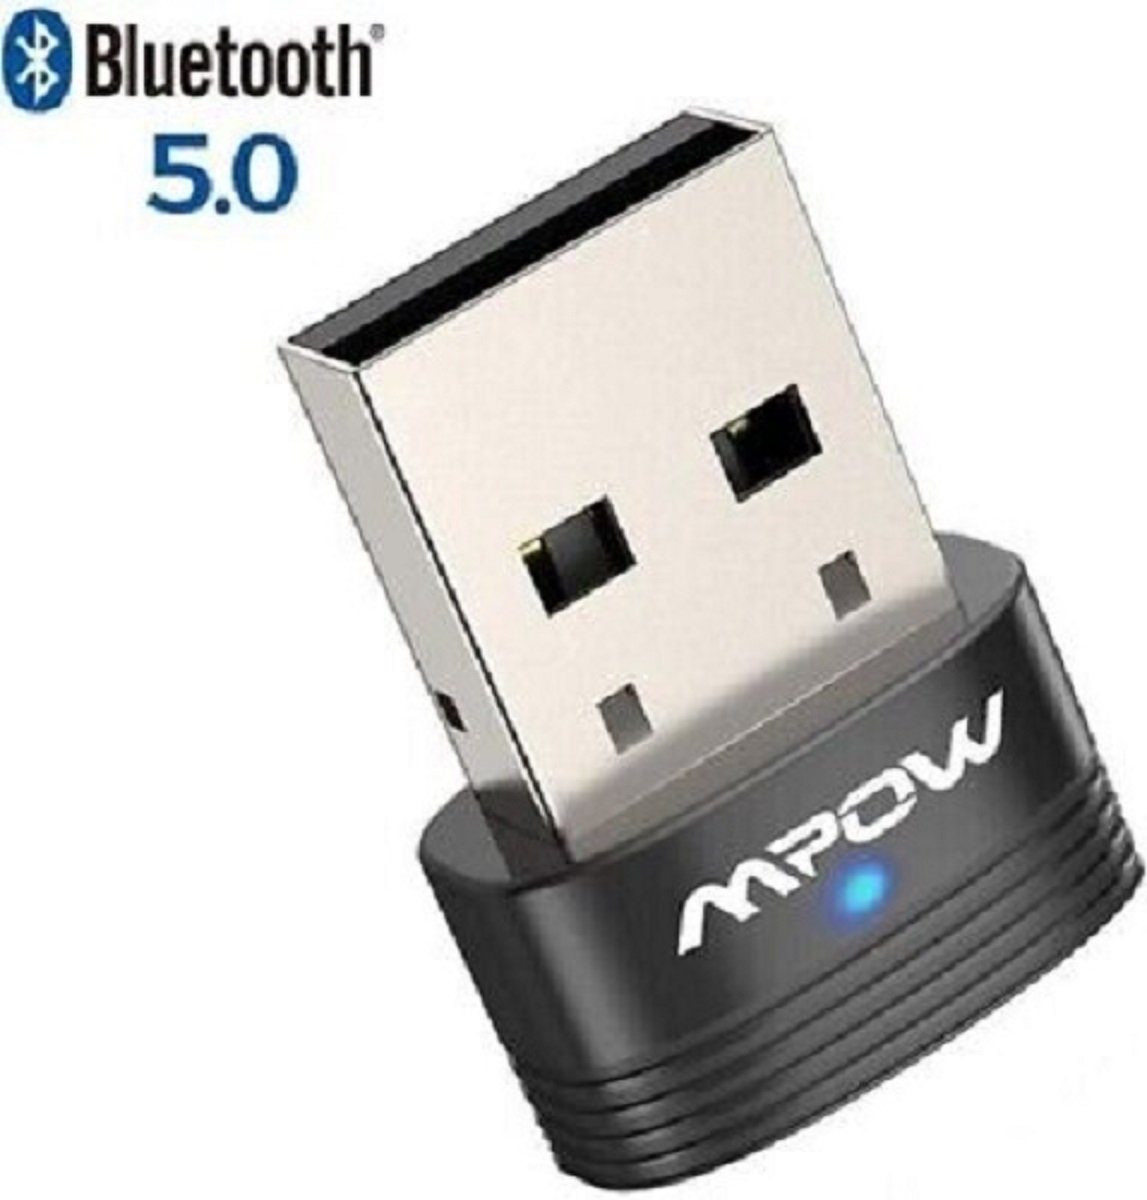 Mpow Bluetooth®-Sender Bluetooth 5.0 Empfänger Sender USB Dongle